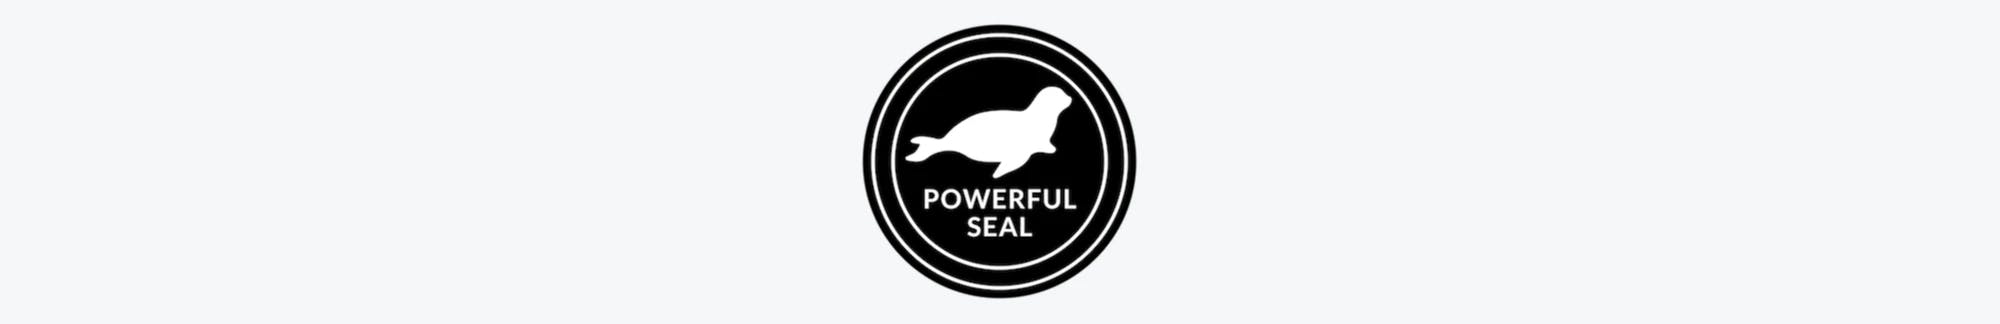 PowerfulSeal logo